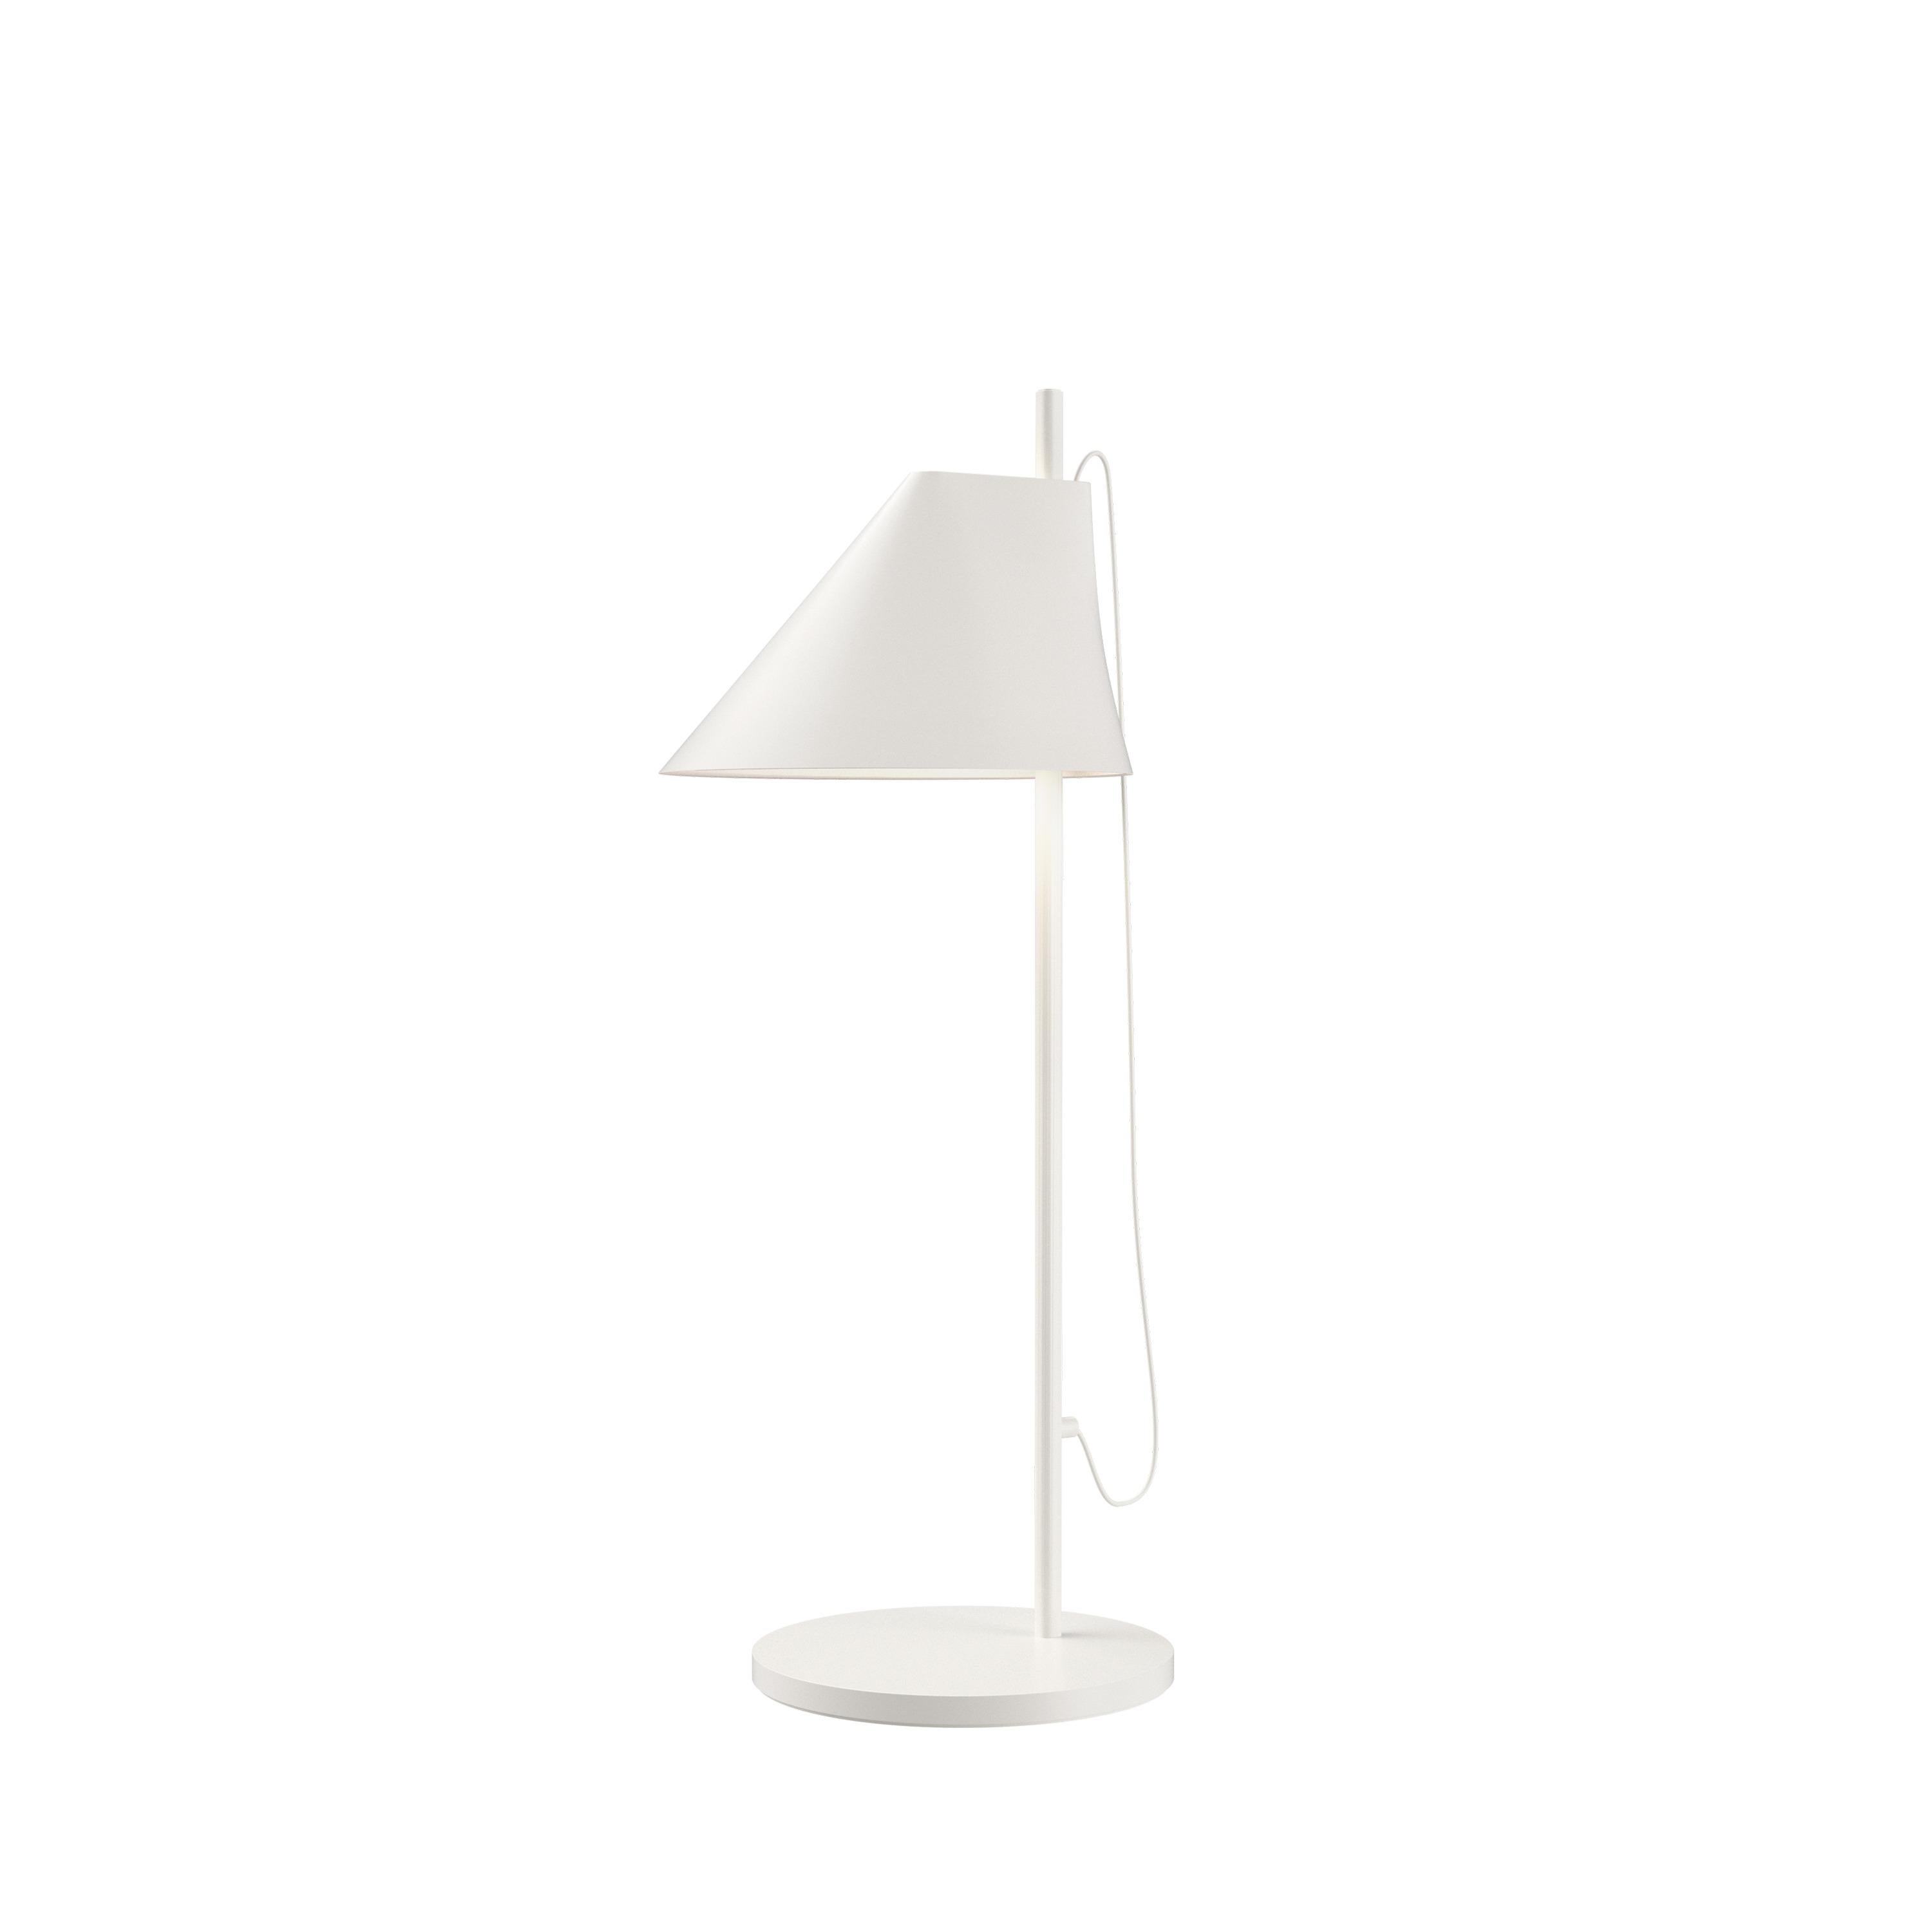 En vente : White (white.jpg) Lampe de table Yuh de Louis Poulsen par GamFratesi